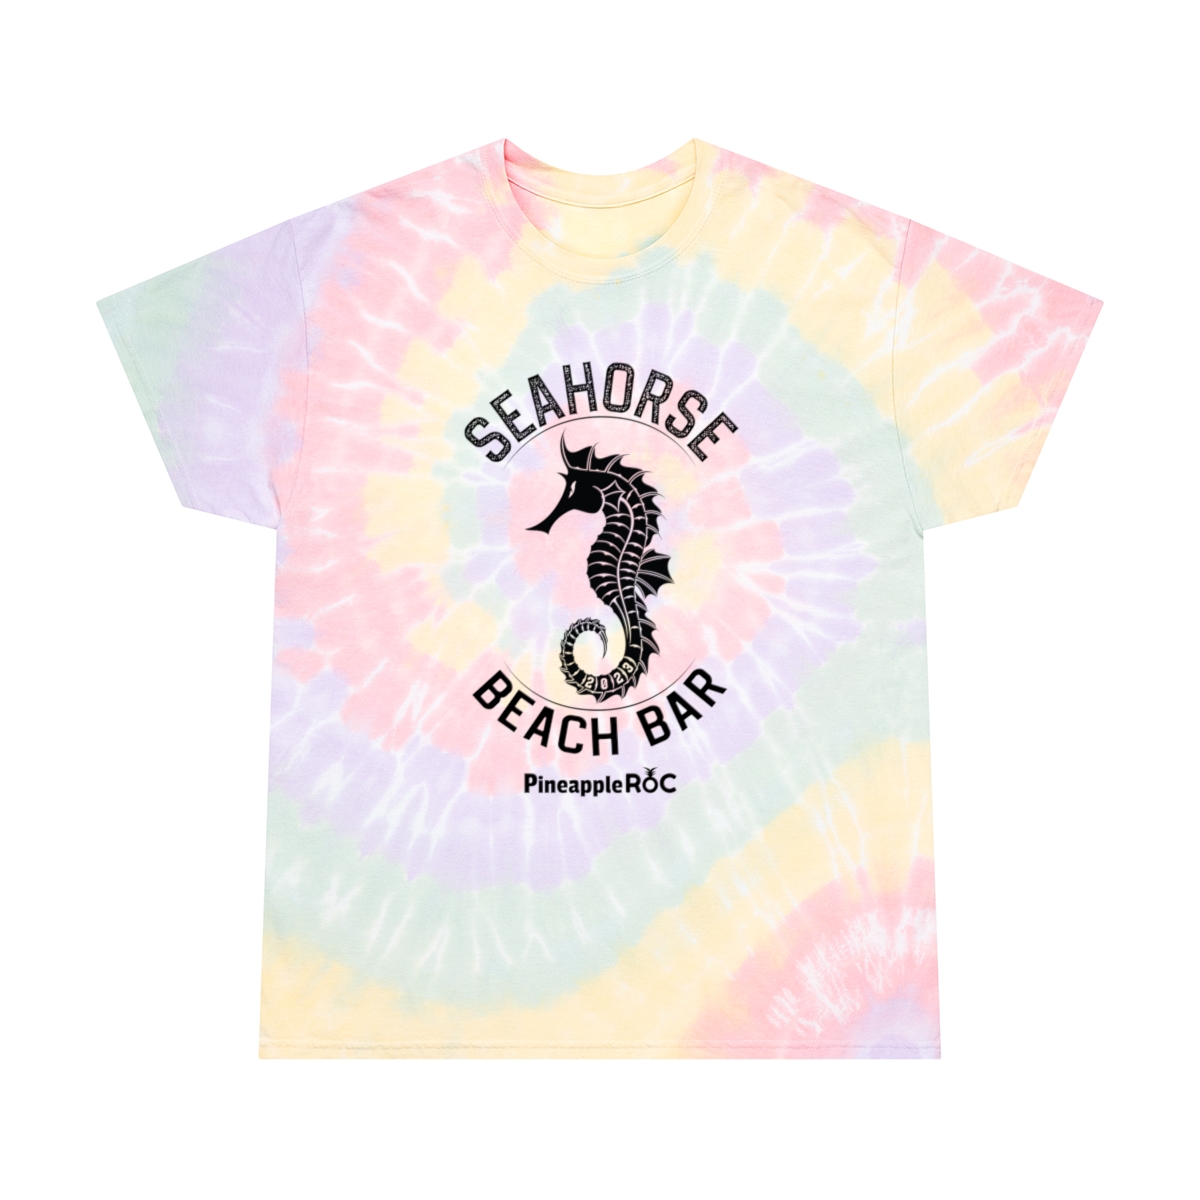 Seahorse Beach Bar product main image